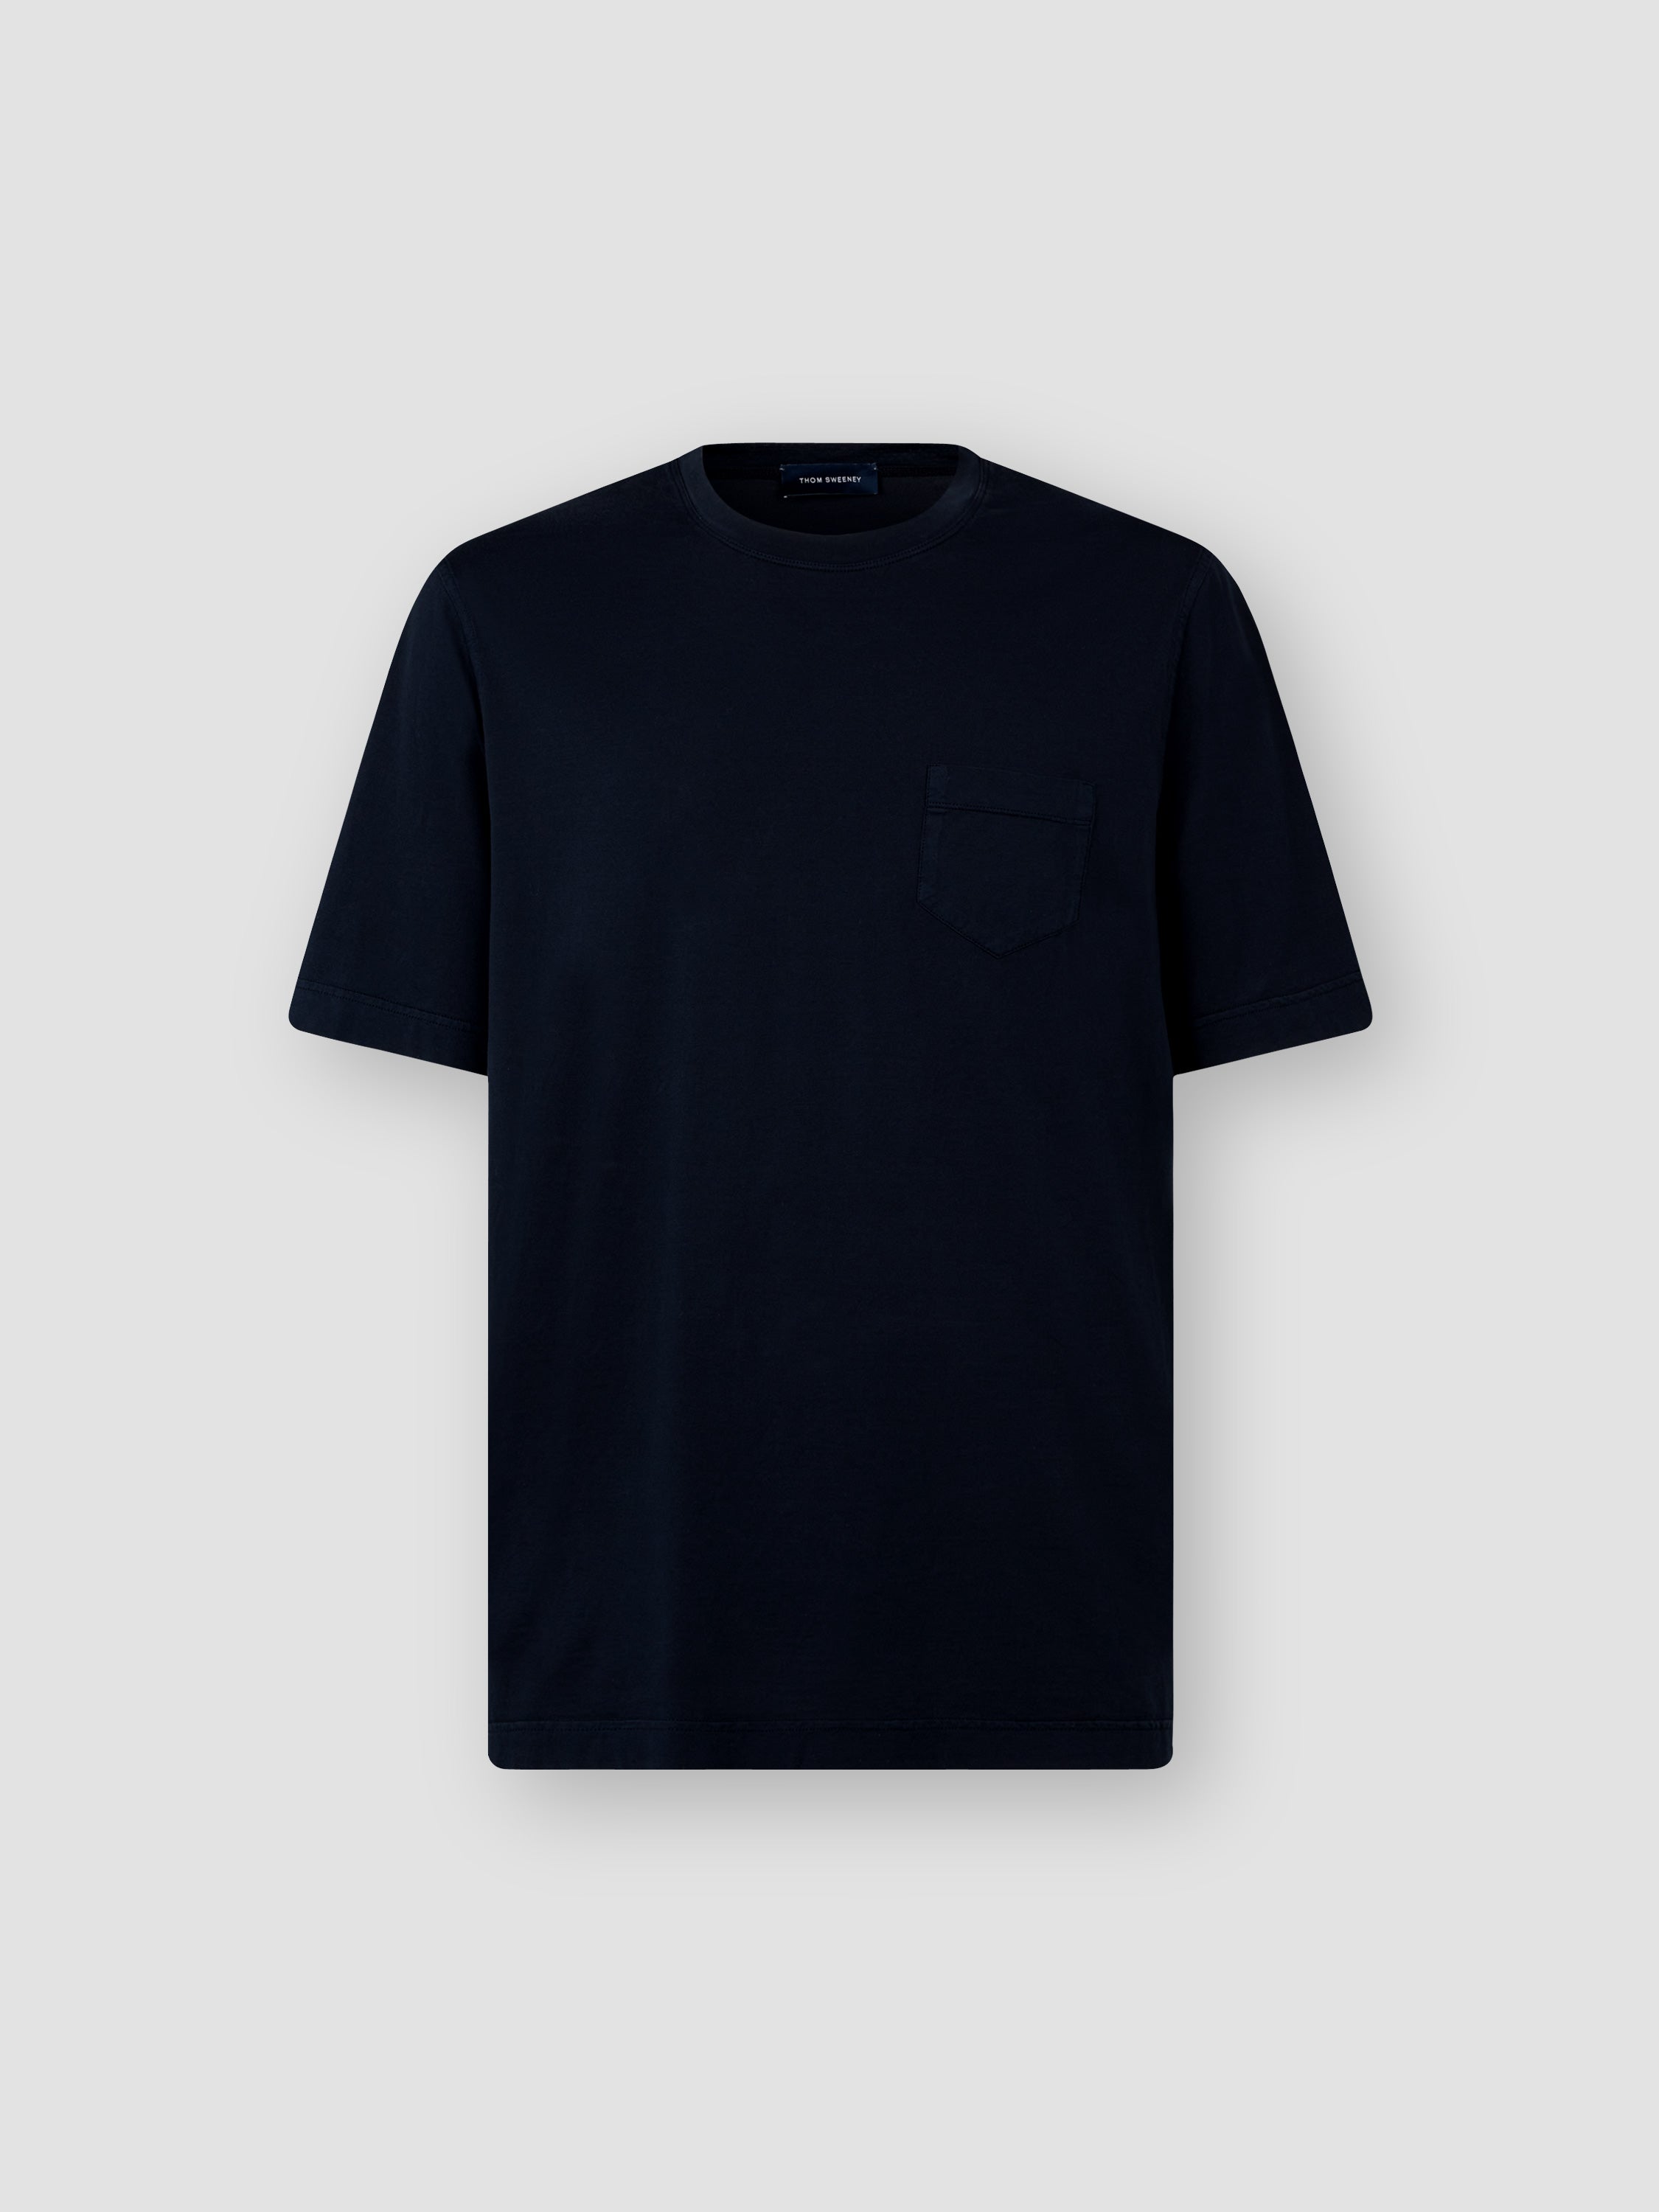 Cotton Pocket T-Shirt Navy Product